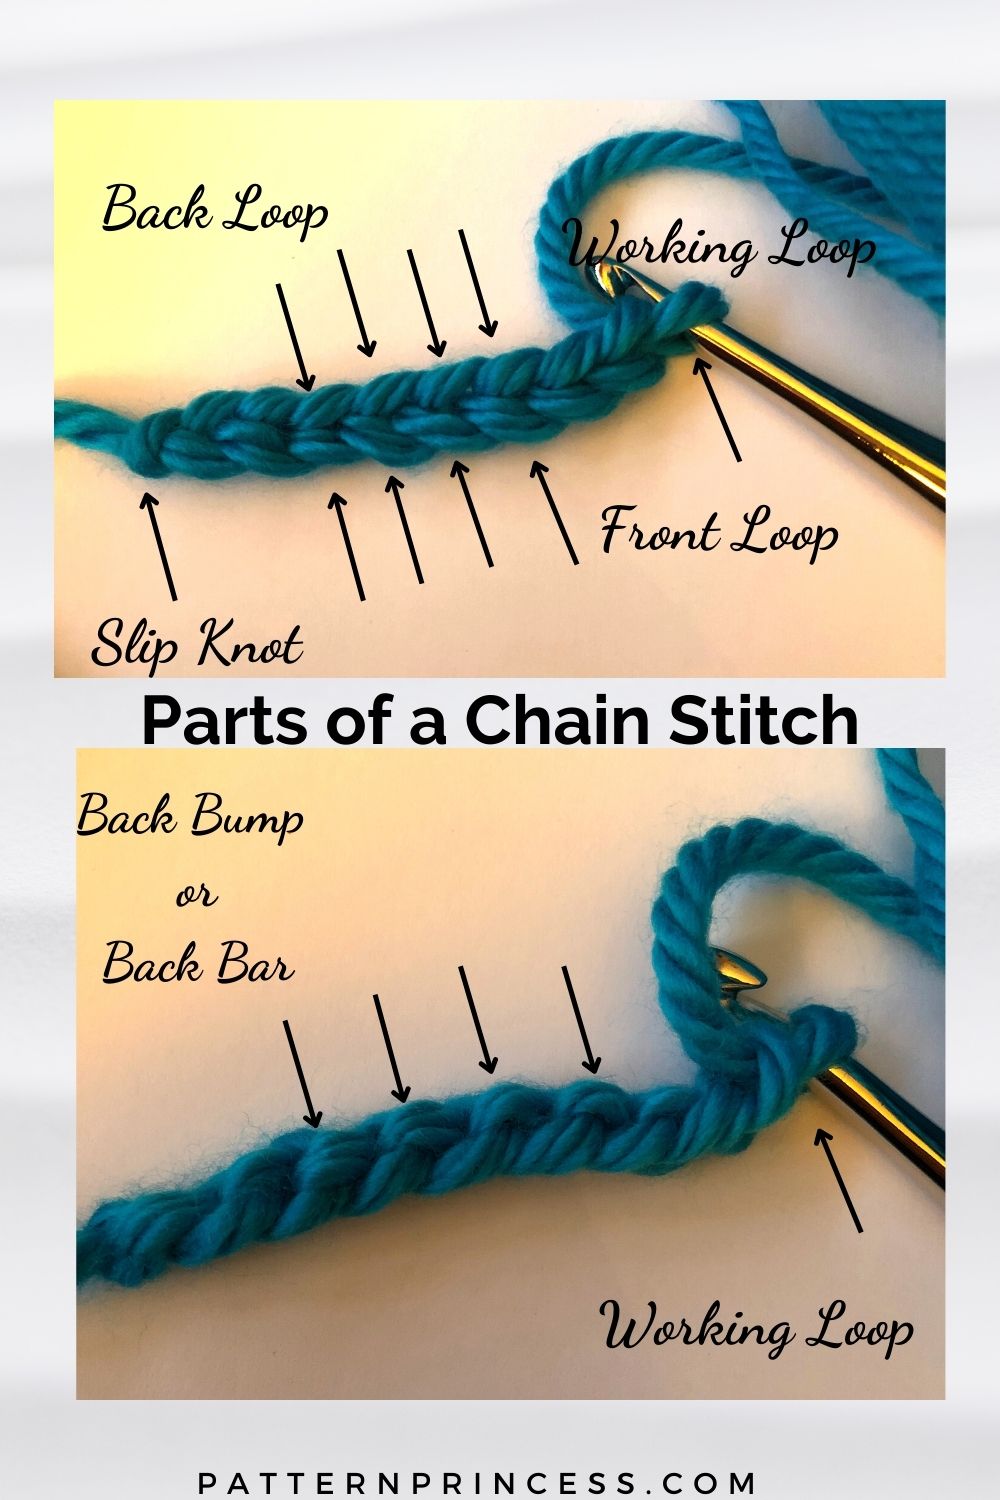 Parts of a Chain Stitch